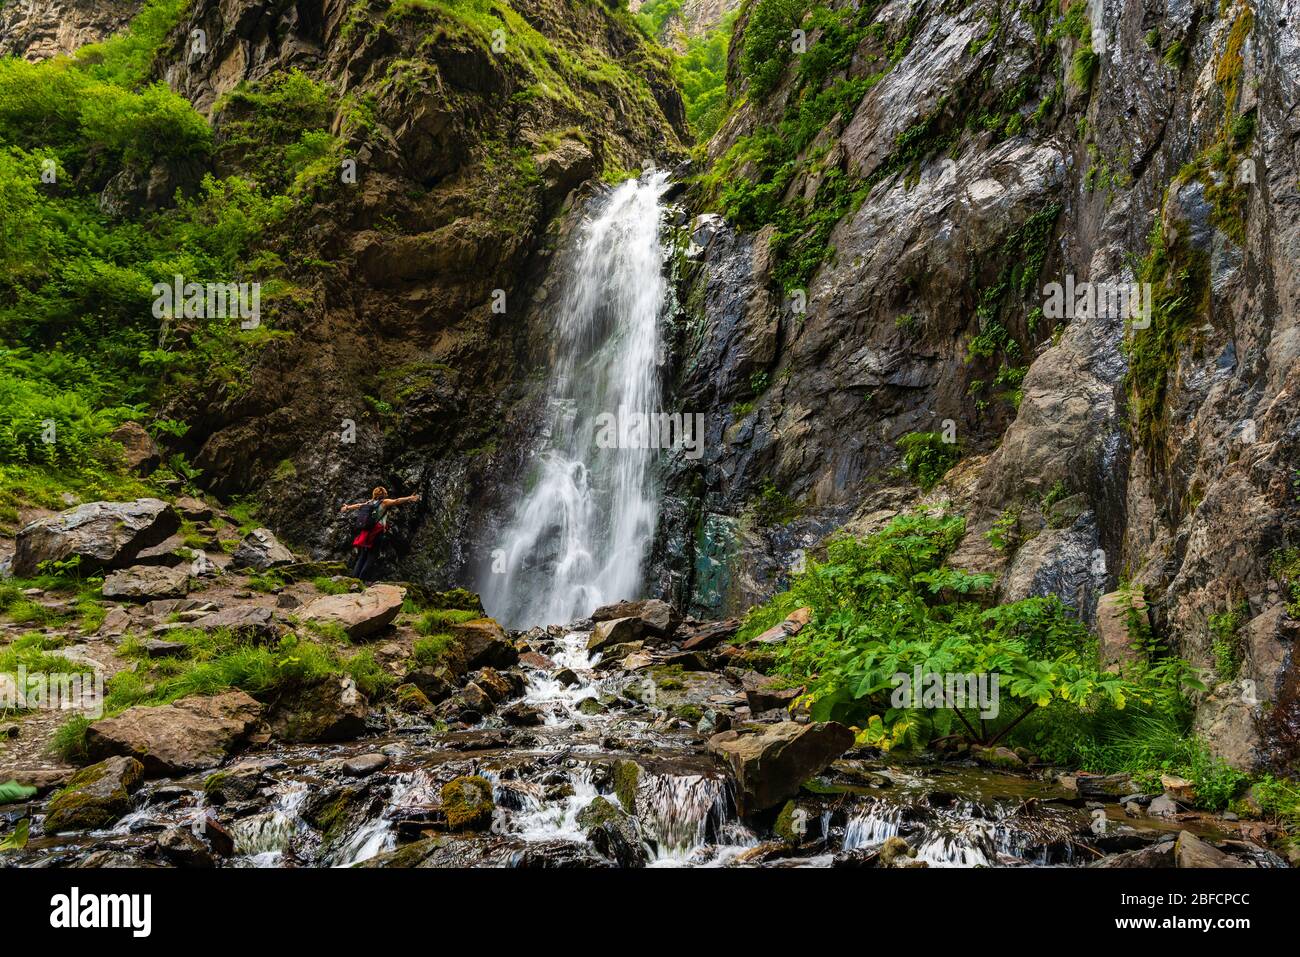 Gveleti Small Waterfalls being in a Dariali Gorge near the Kazbegi city in the mountains of the Caucasus, Geprgia Stock Photo